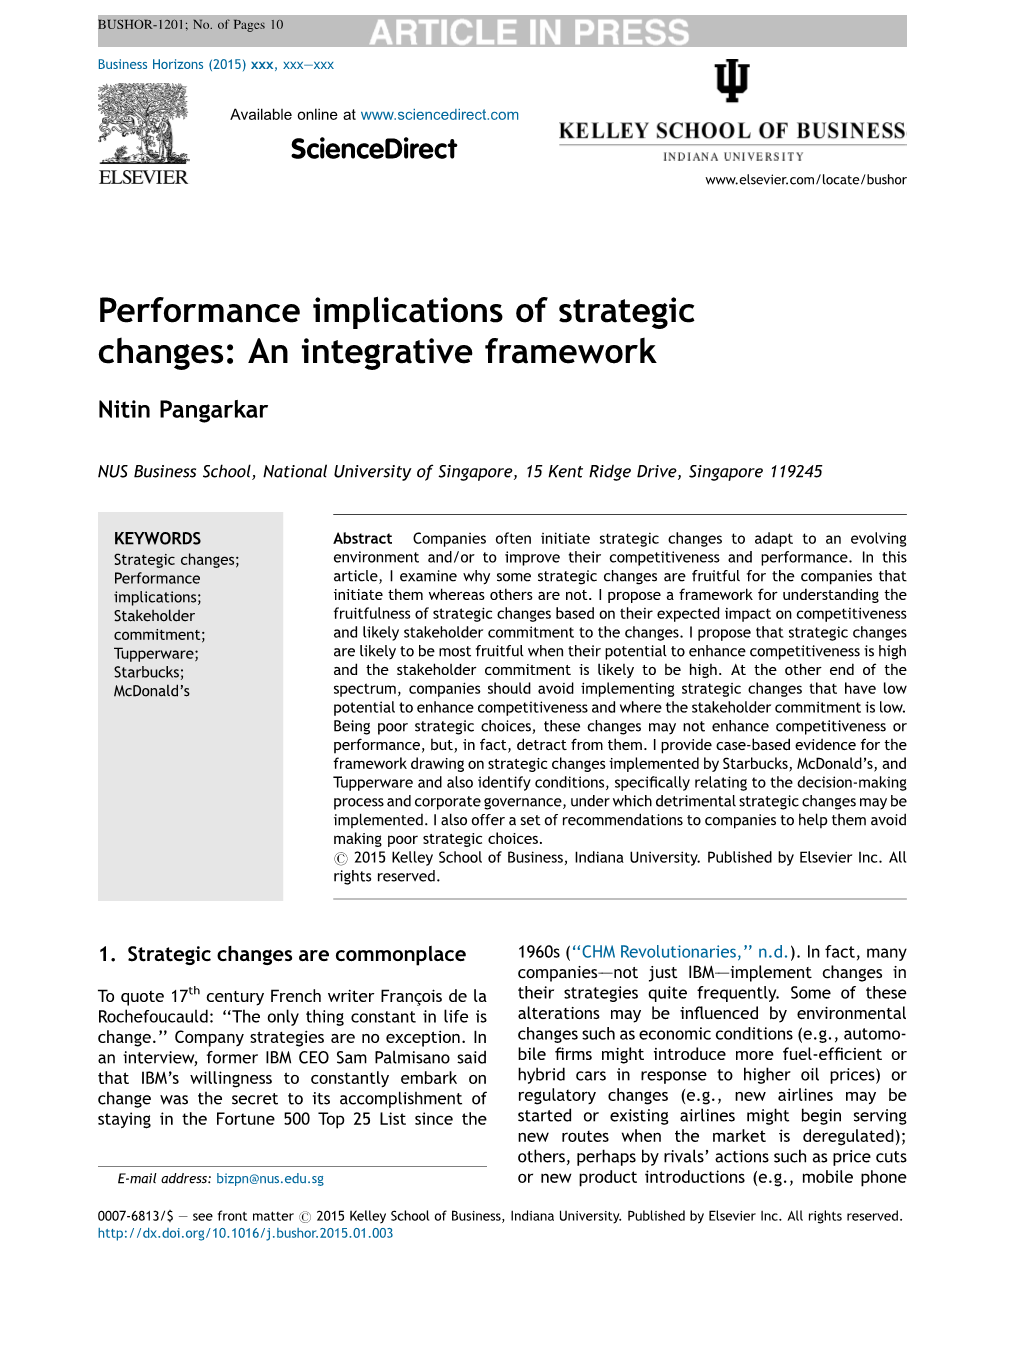 Performance Implications of Strategic Changes: an Integrative Framework 3